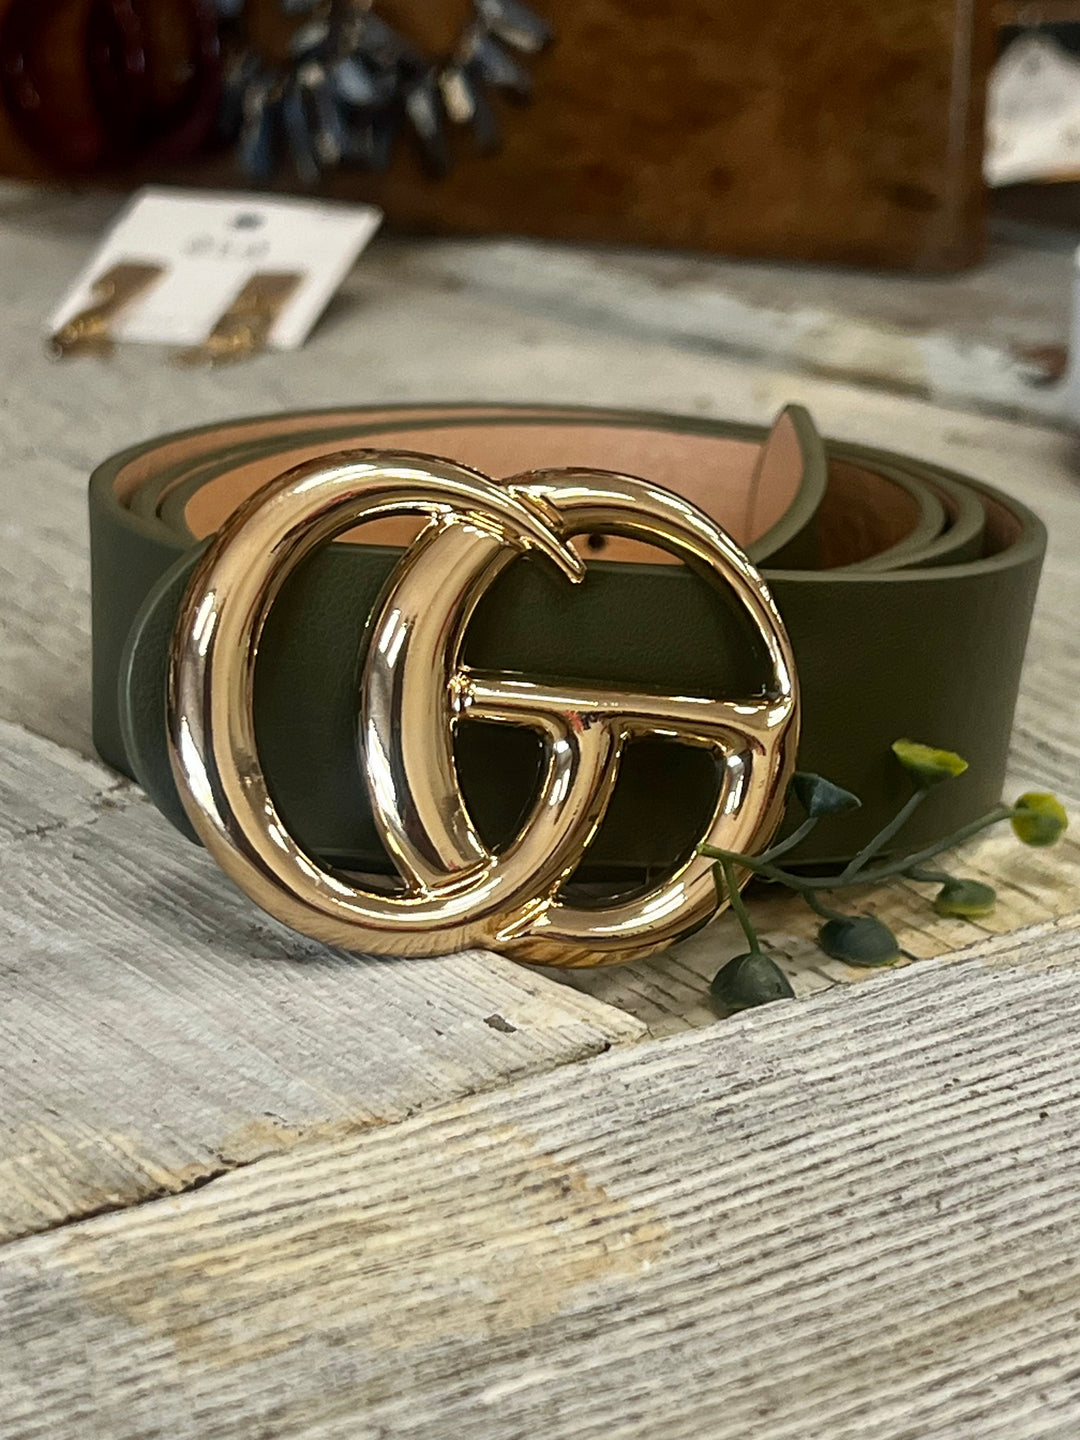 Olive Green Belt with Gold CG Belt